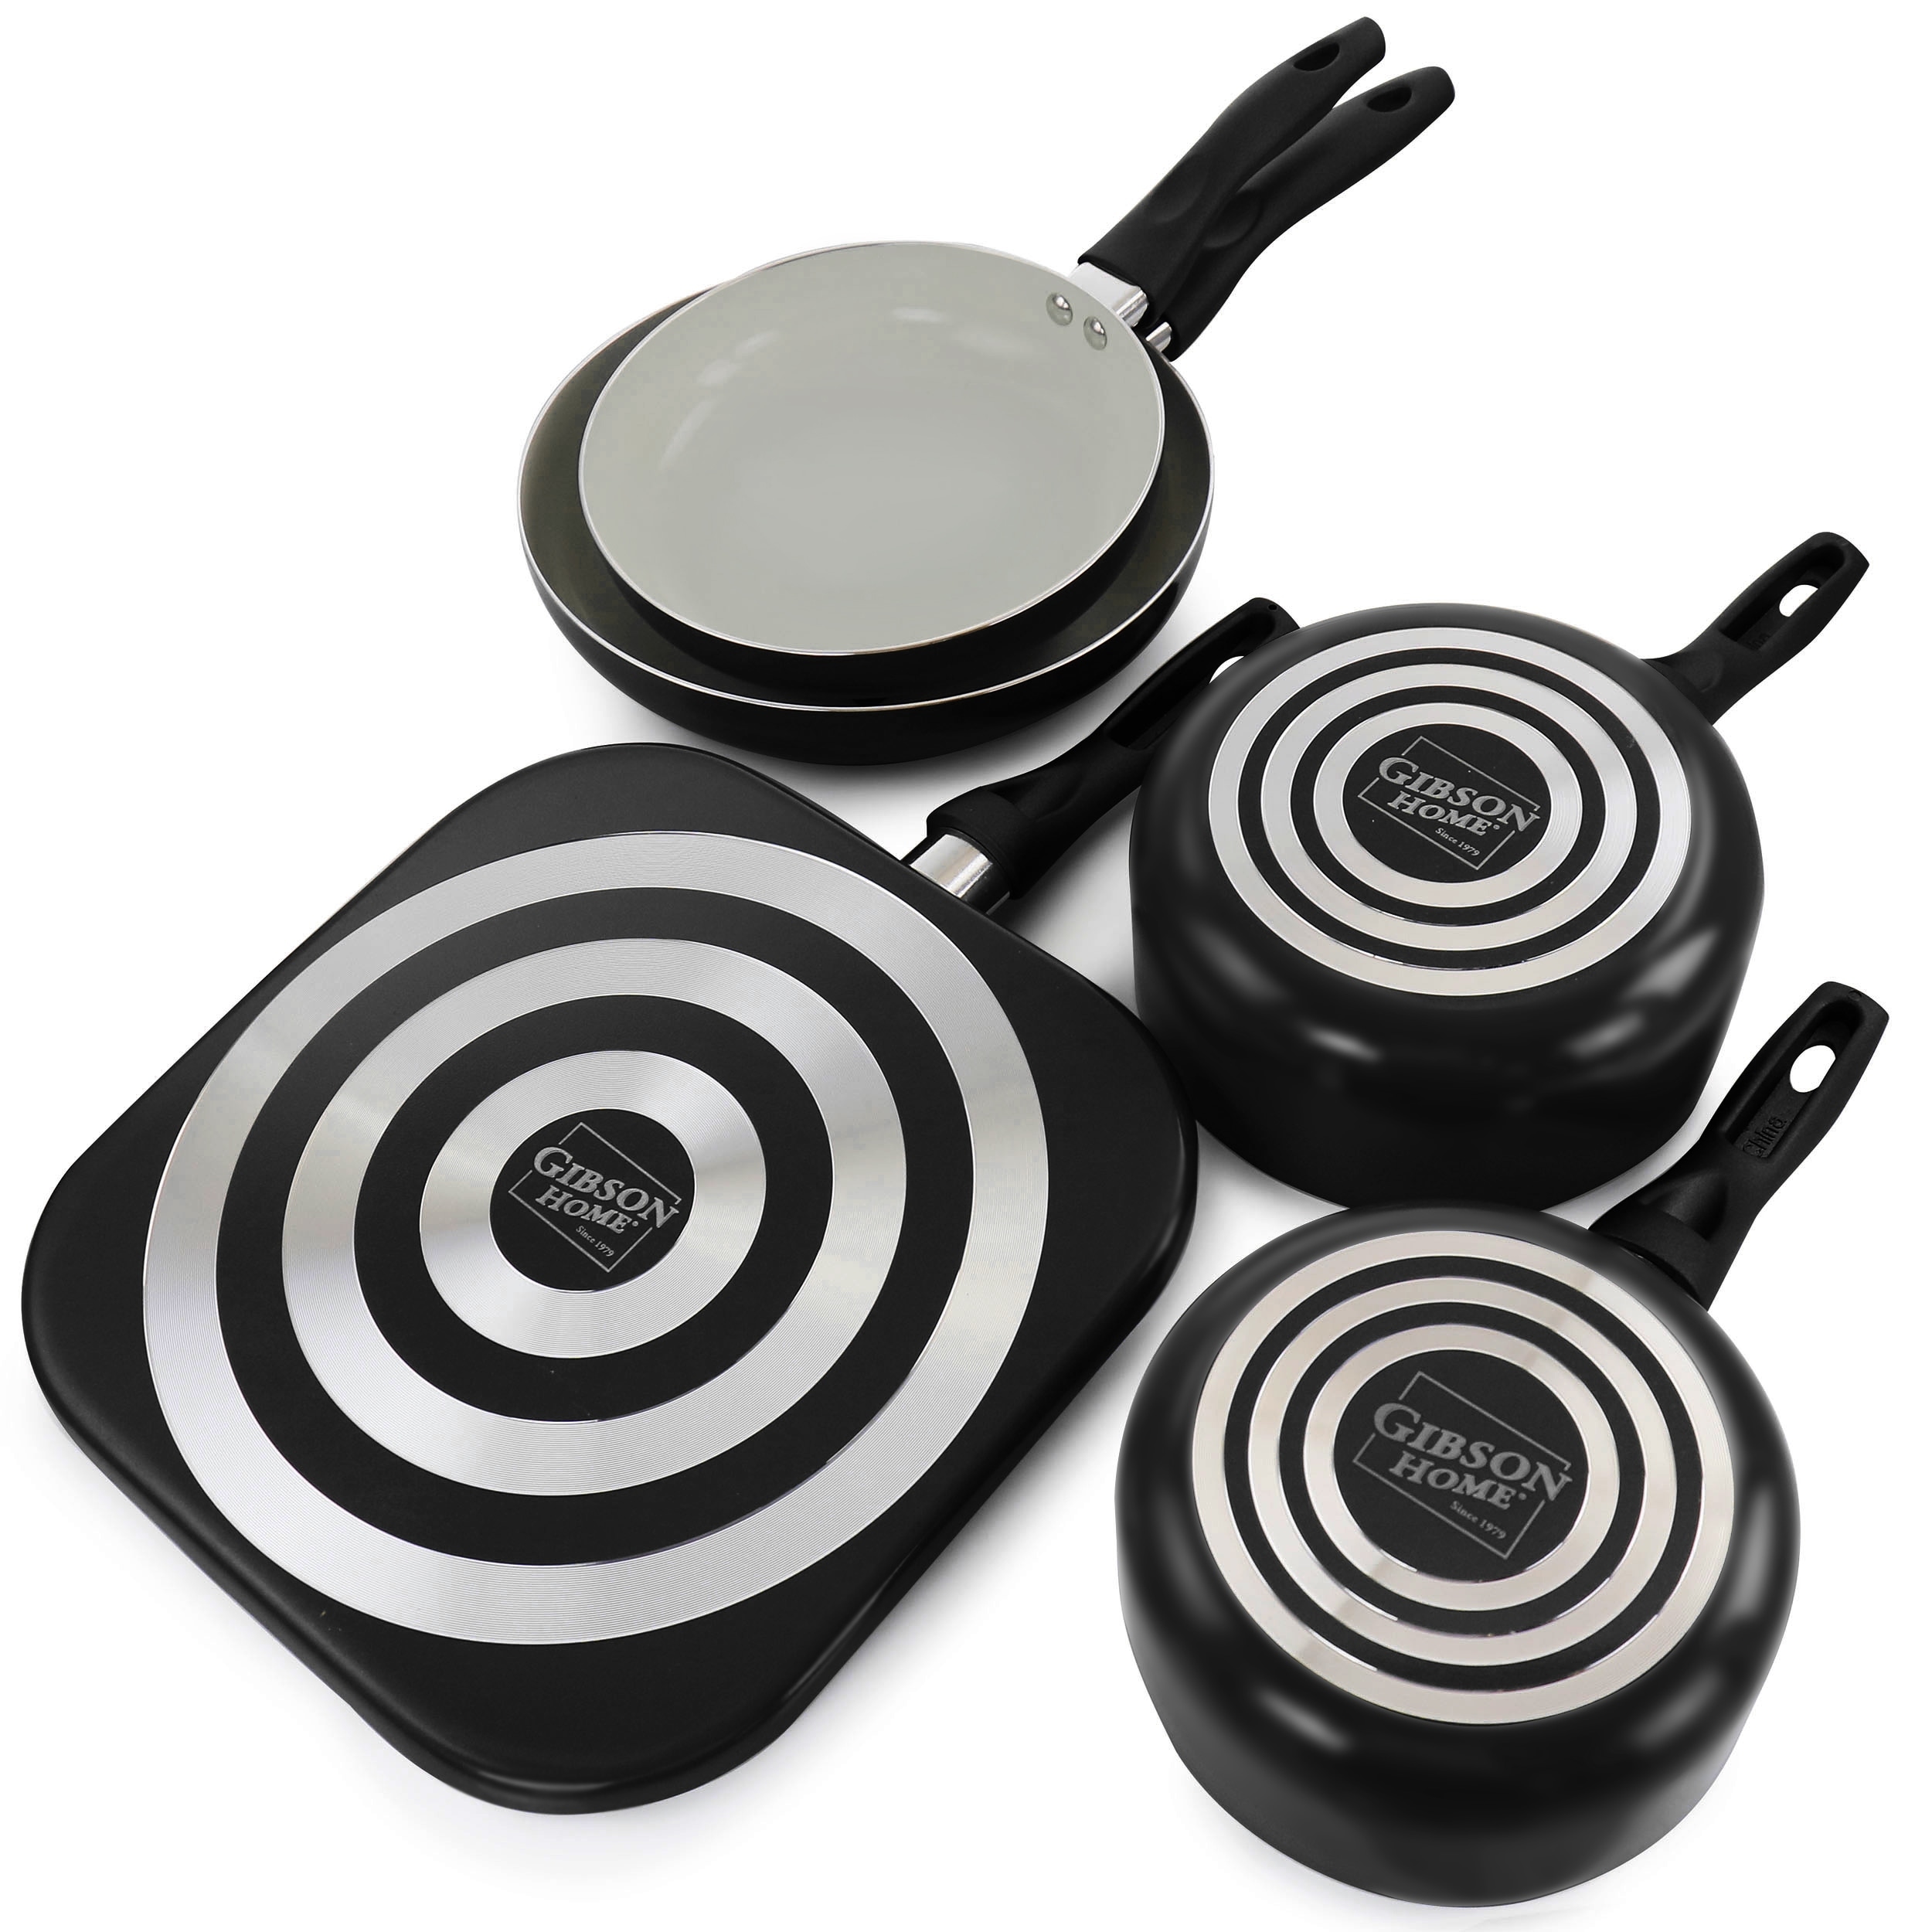 https://ak1.ostkcdn.com/images/products/is/images/direct/d3836d54f7676e73196b156fa8fcf6274134c16b/Ceramic-Nonstick-Aluminum-11-Piece-Cookware-Set-in-Black.jpg